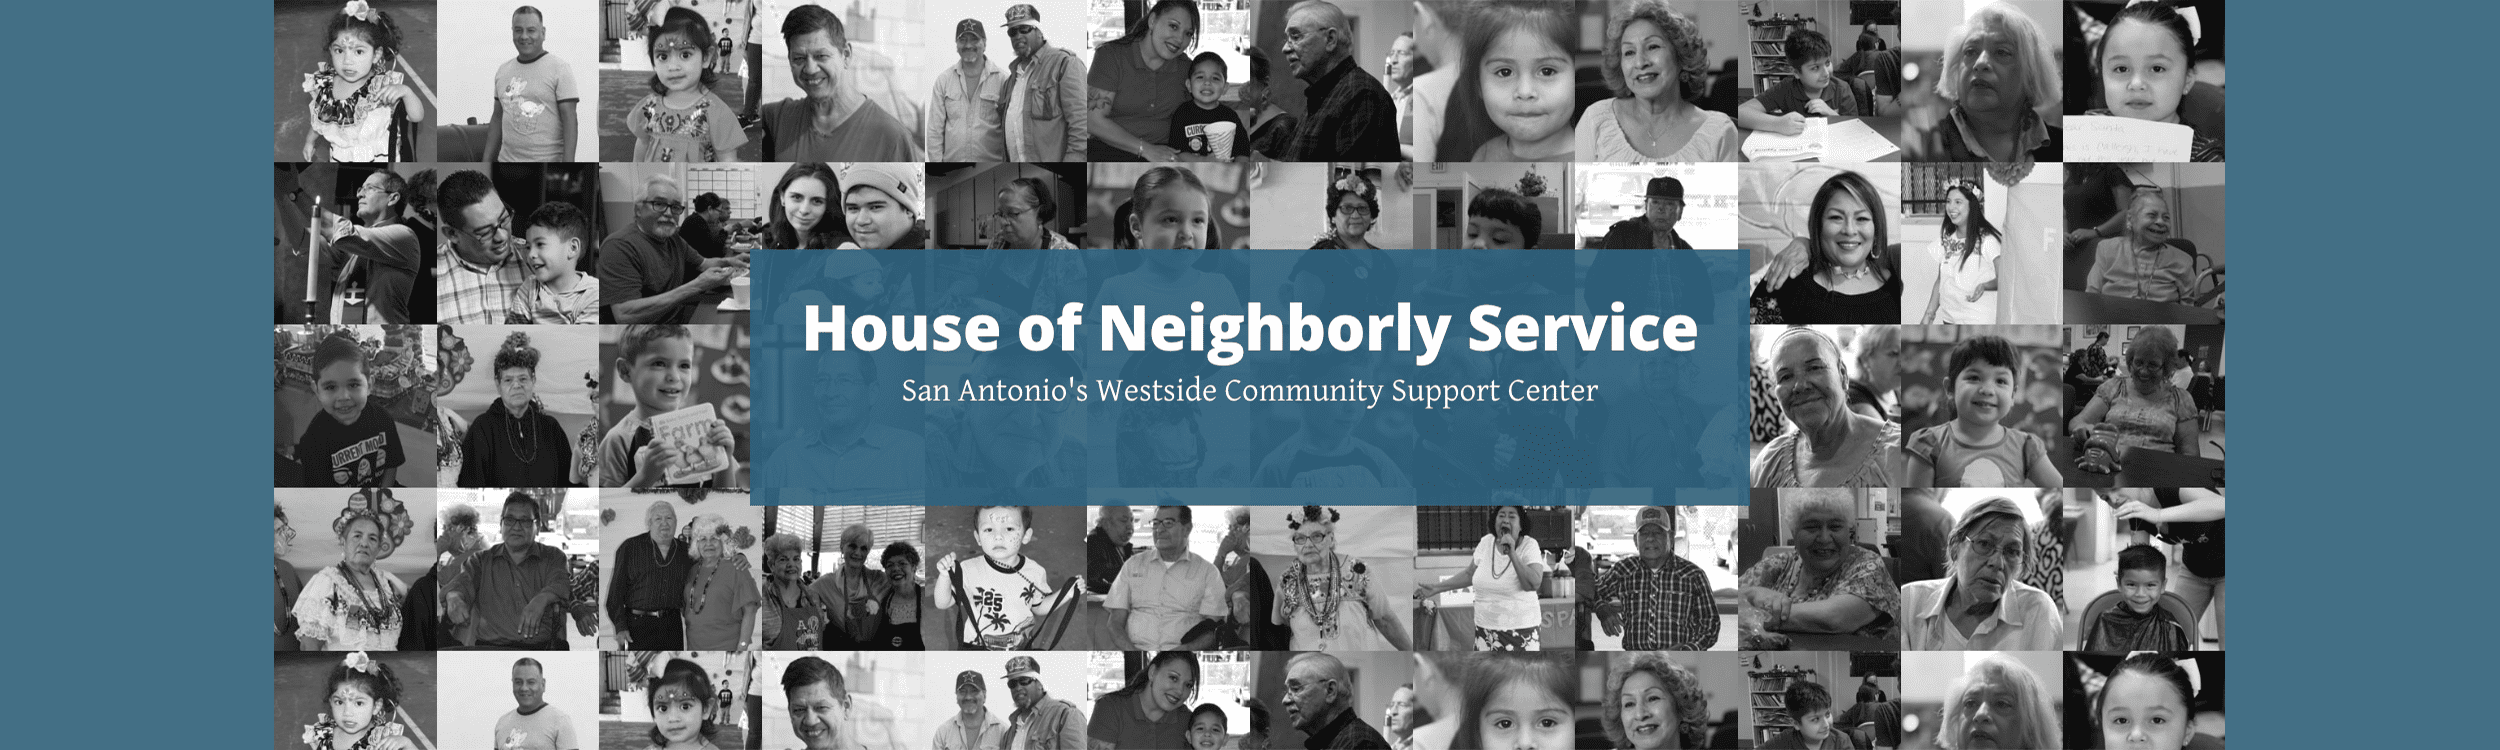 House of Neighborly Service homepage header